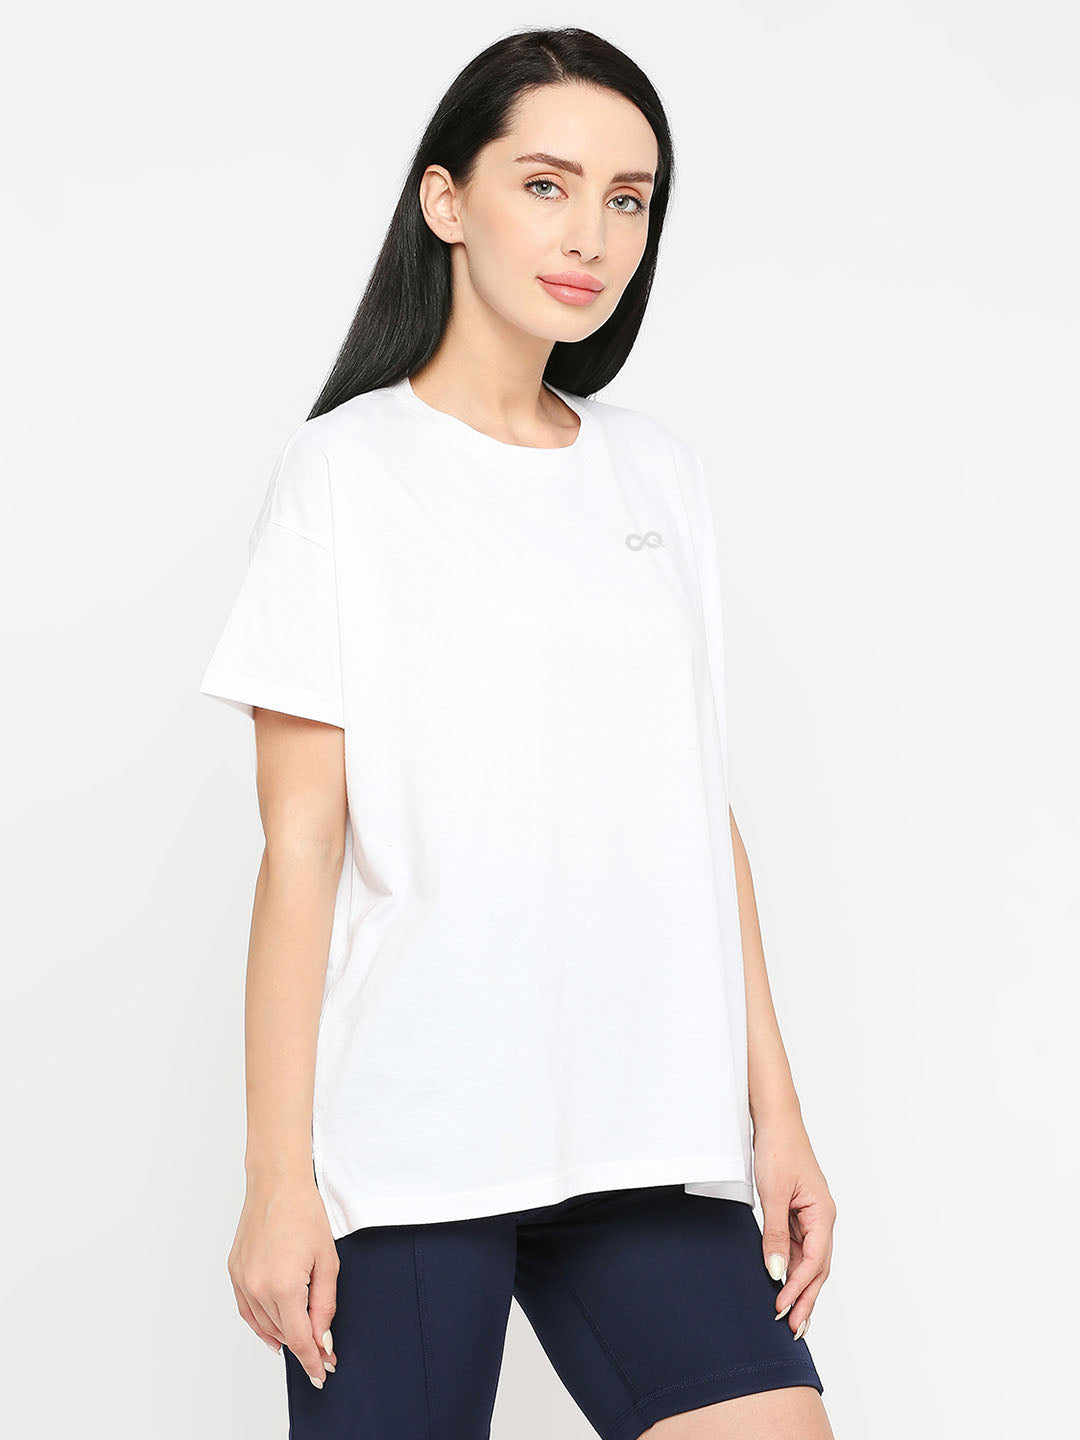 Women's White Oversized Sports T-Shirt - Stay Stylish and